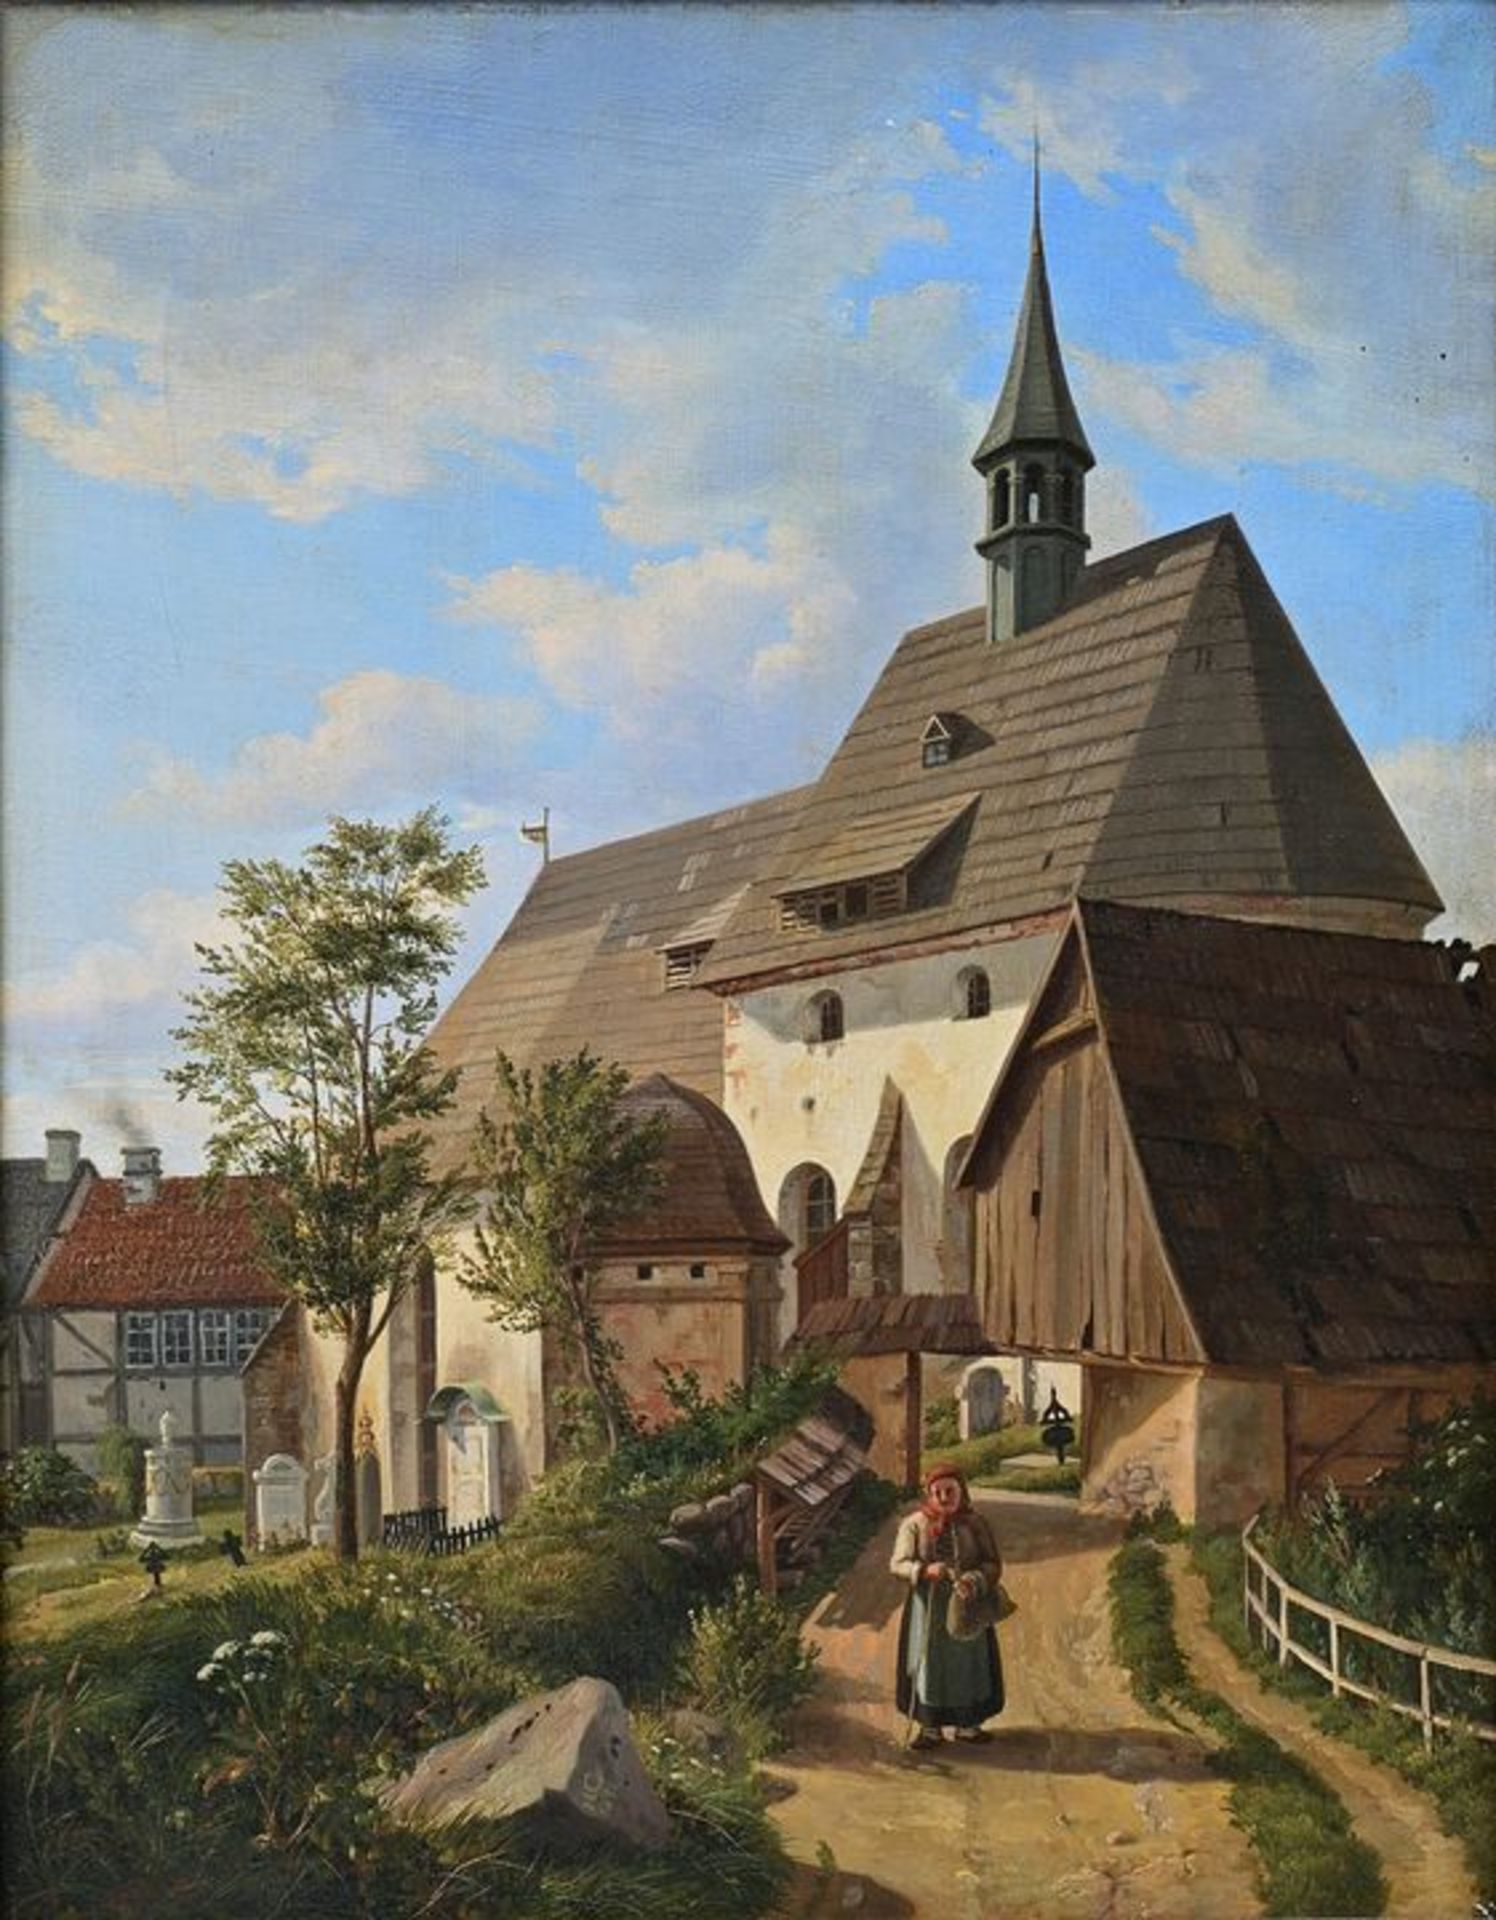 Kirche in Sebnitz/ church at Sebnitz